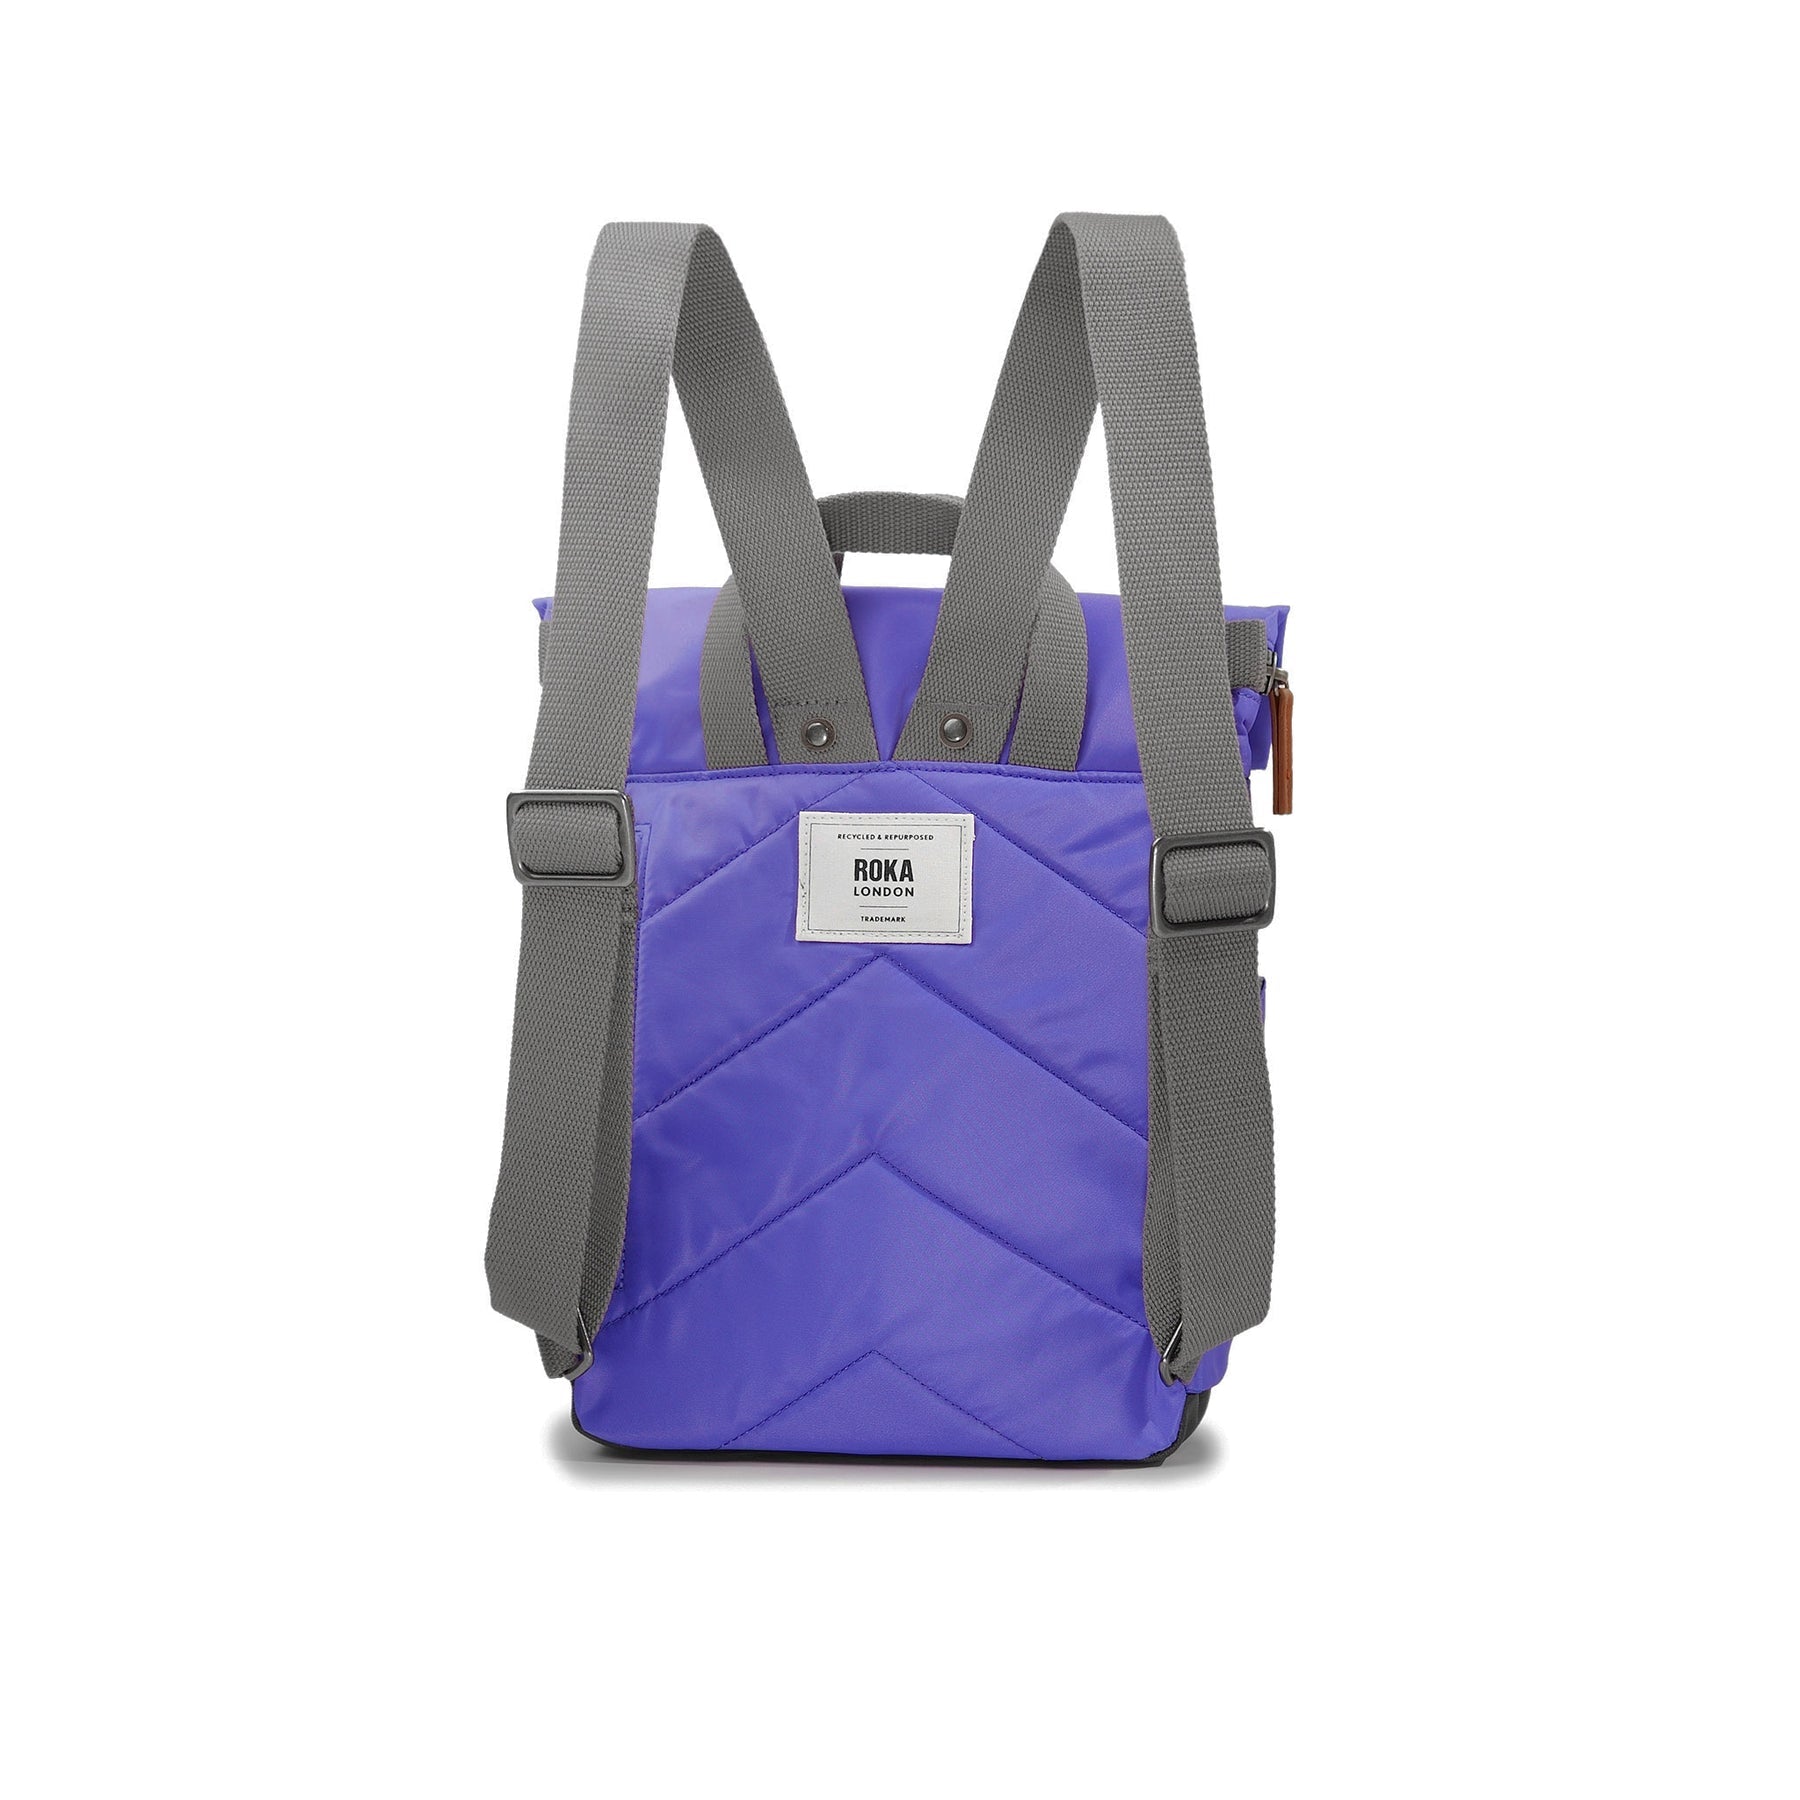 ROKA Canfield B Simple Purple Small Recycled Nylon Bag